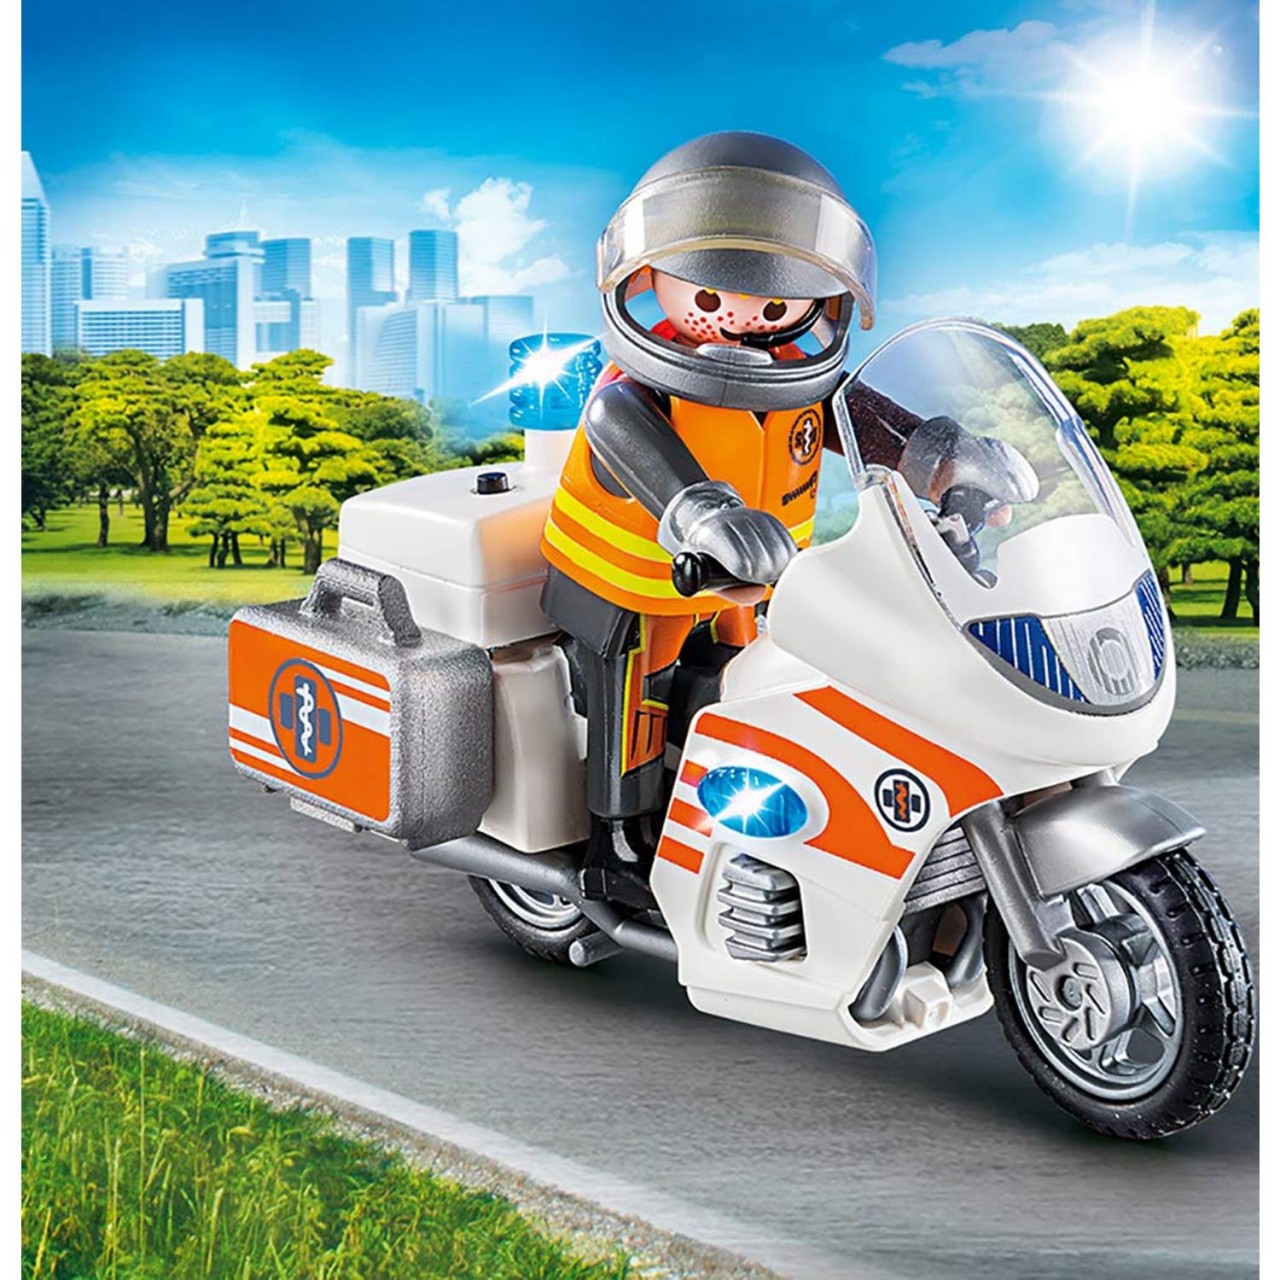 Playmobil 70051 Notarzt-Motorrad mit Blinklicht